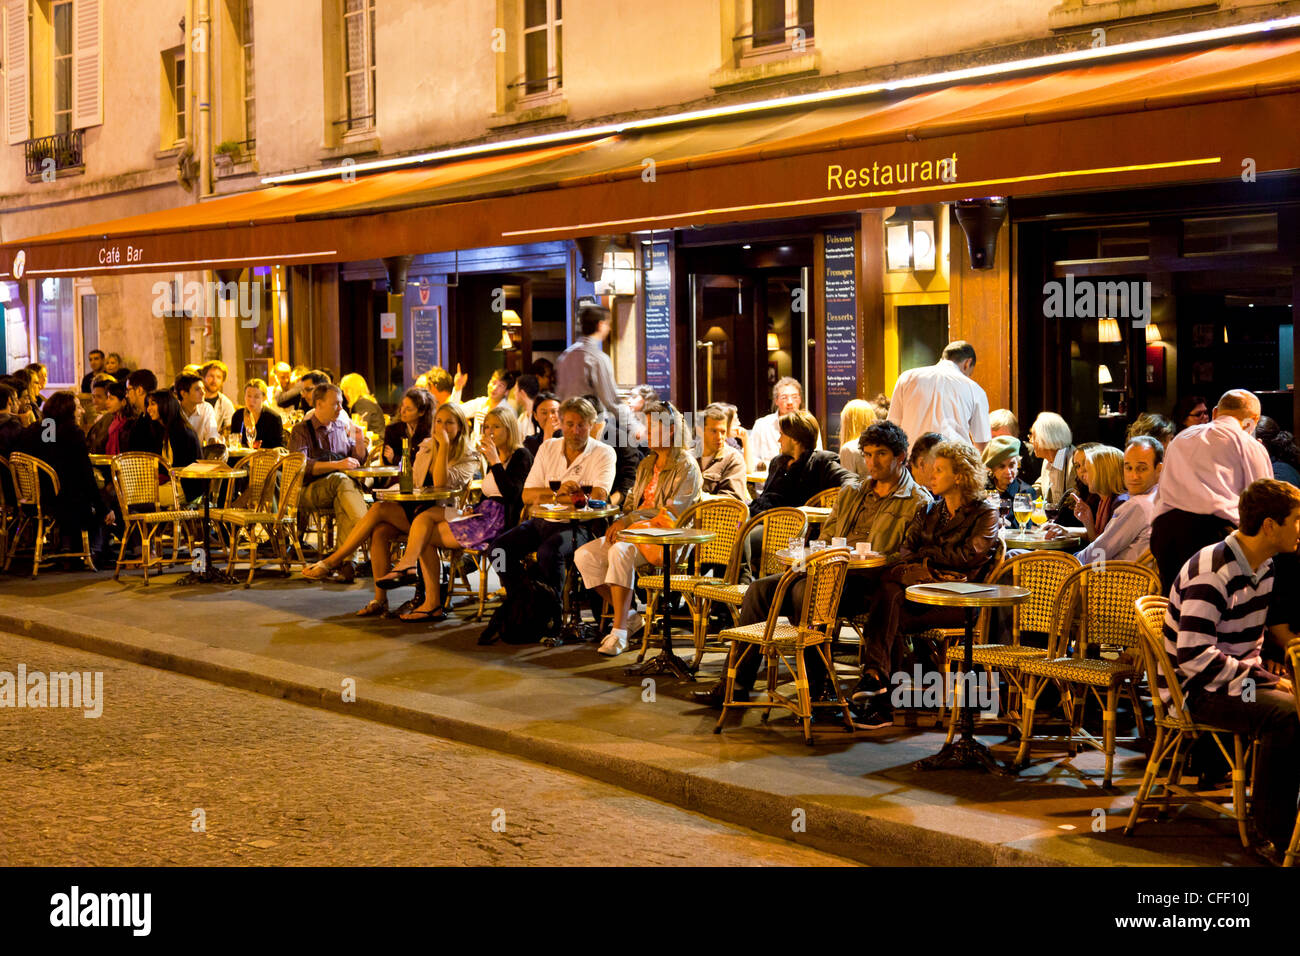 Cafe scene at night, Paris, France, Europe Stock Photo